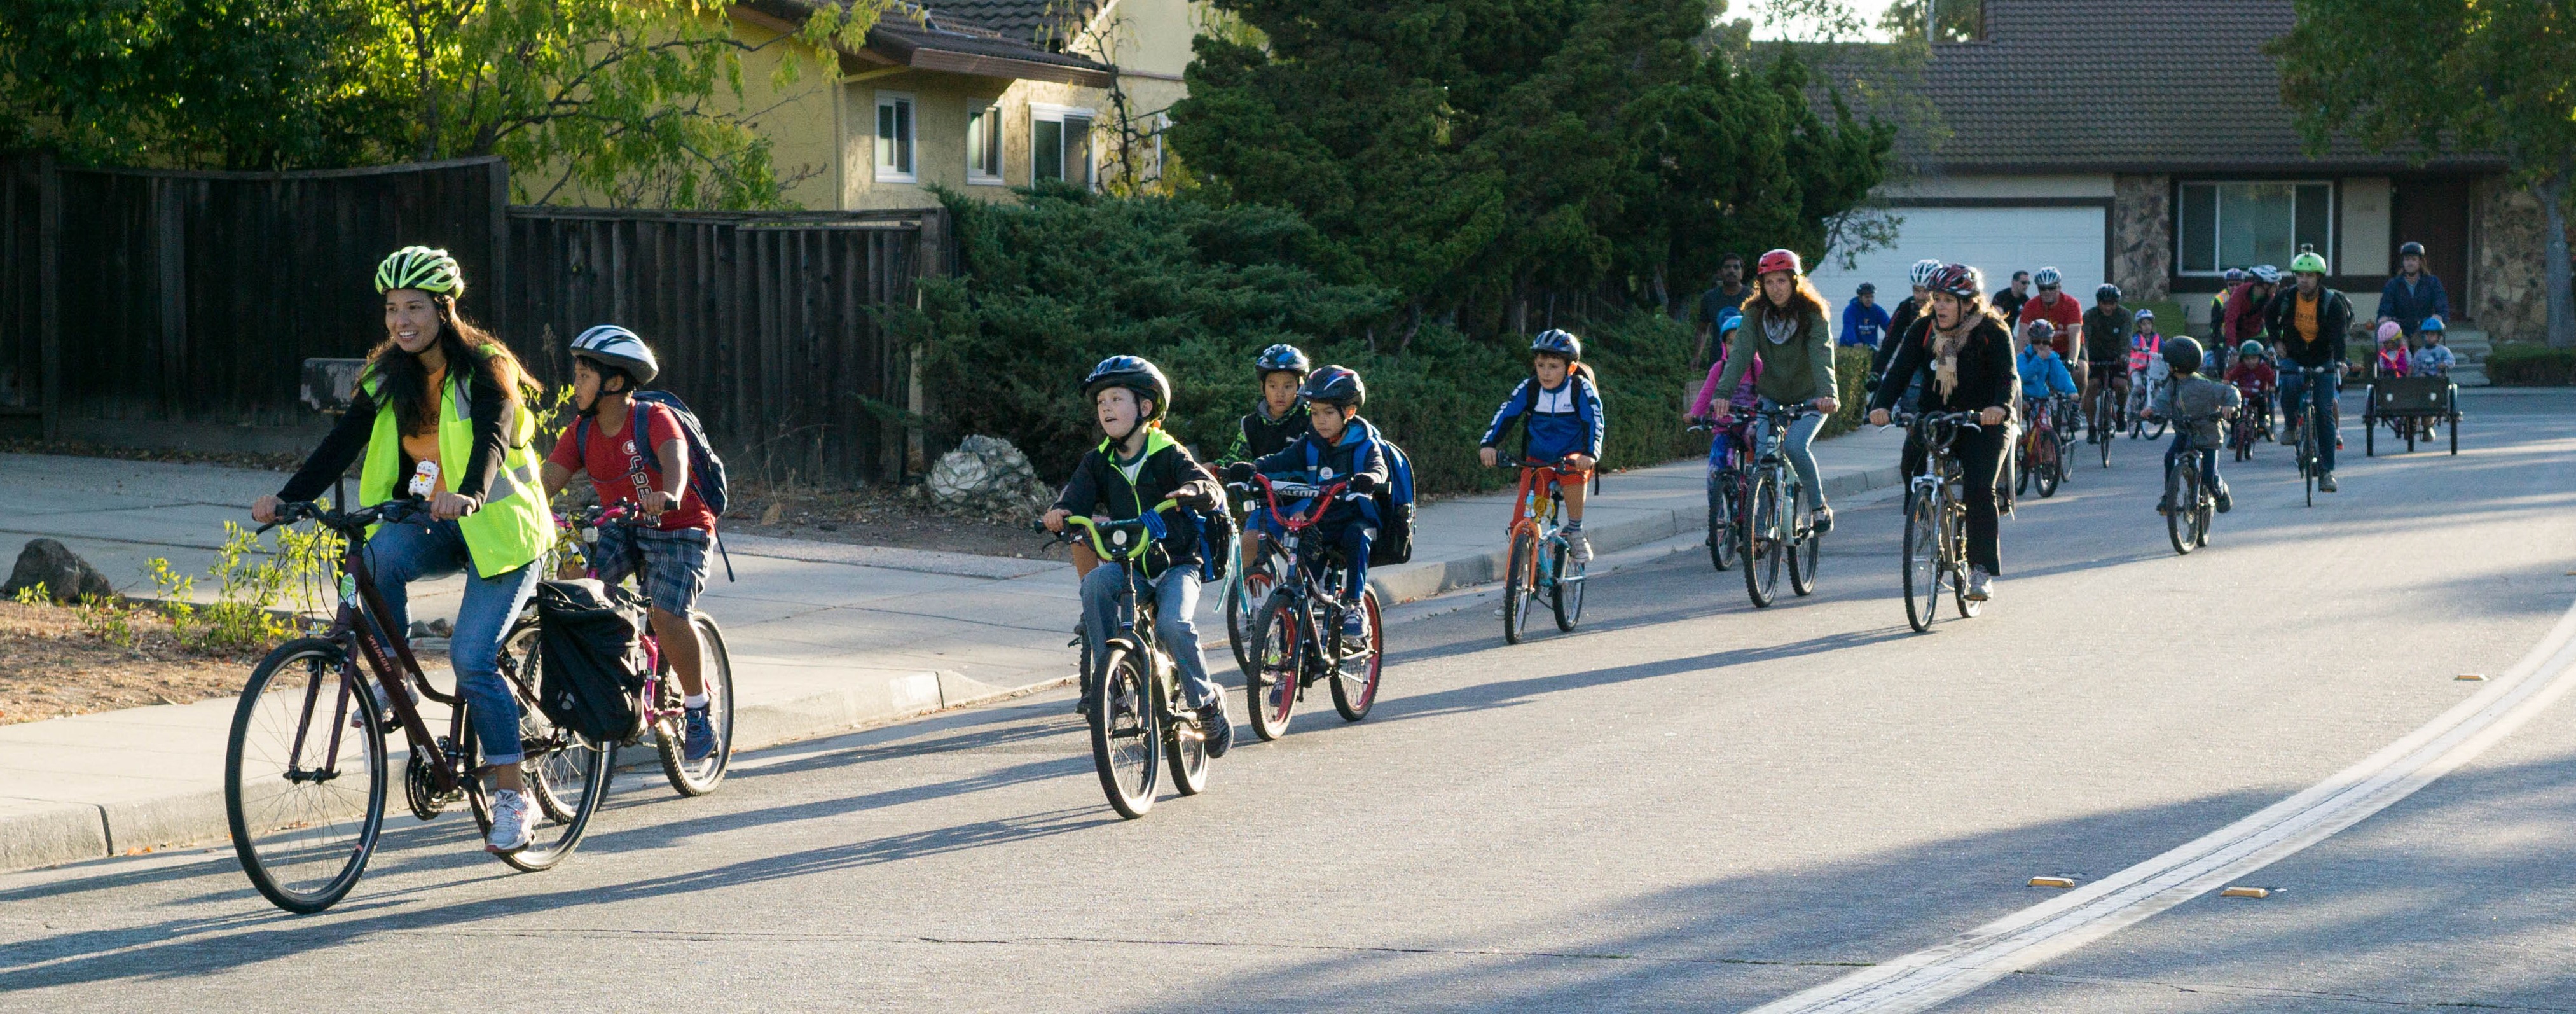 School-Age Children Riding Bikes to School